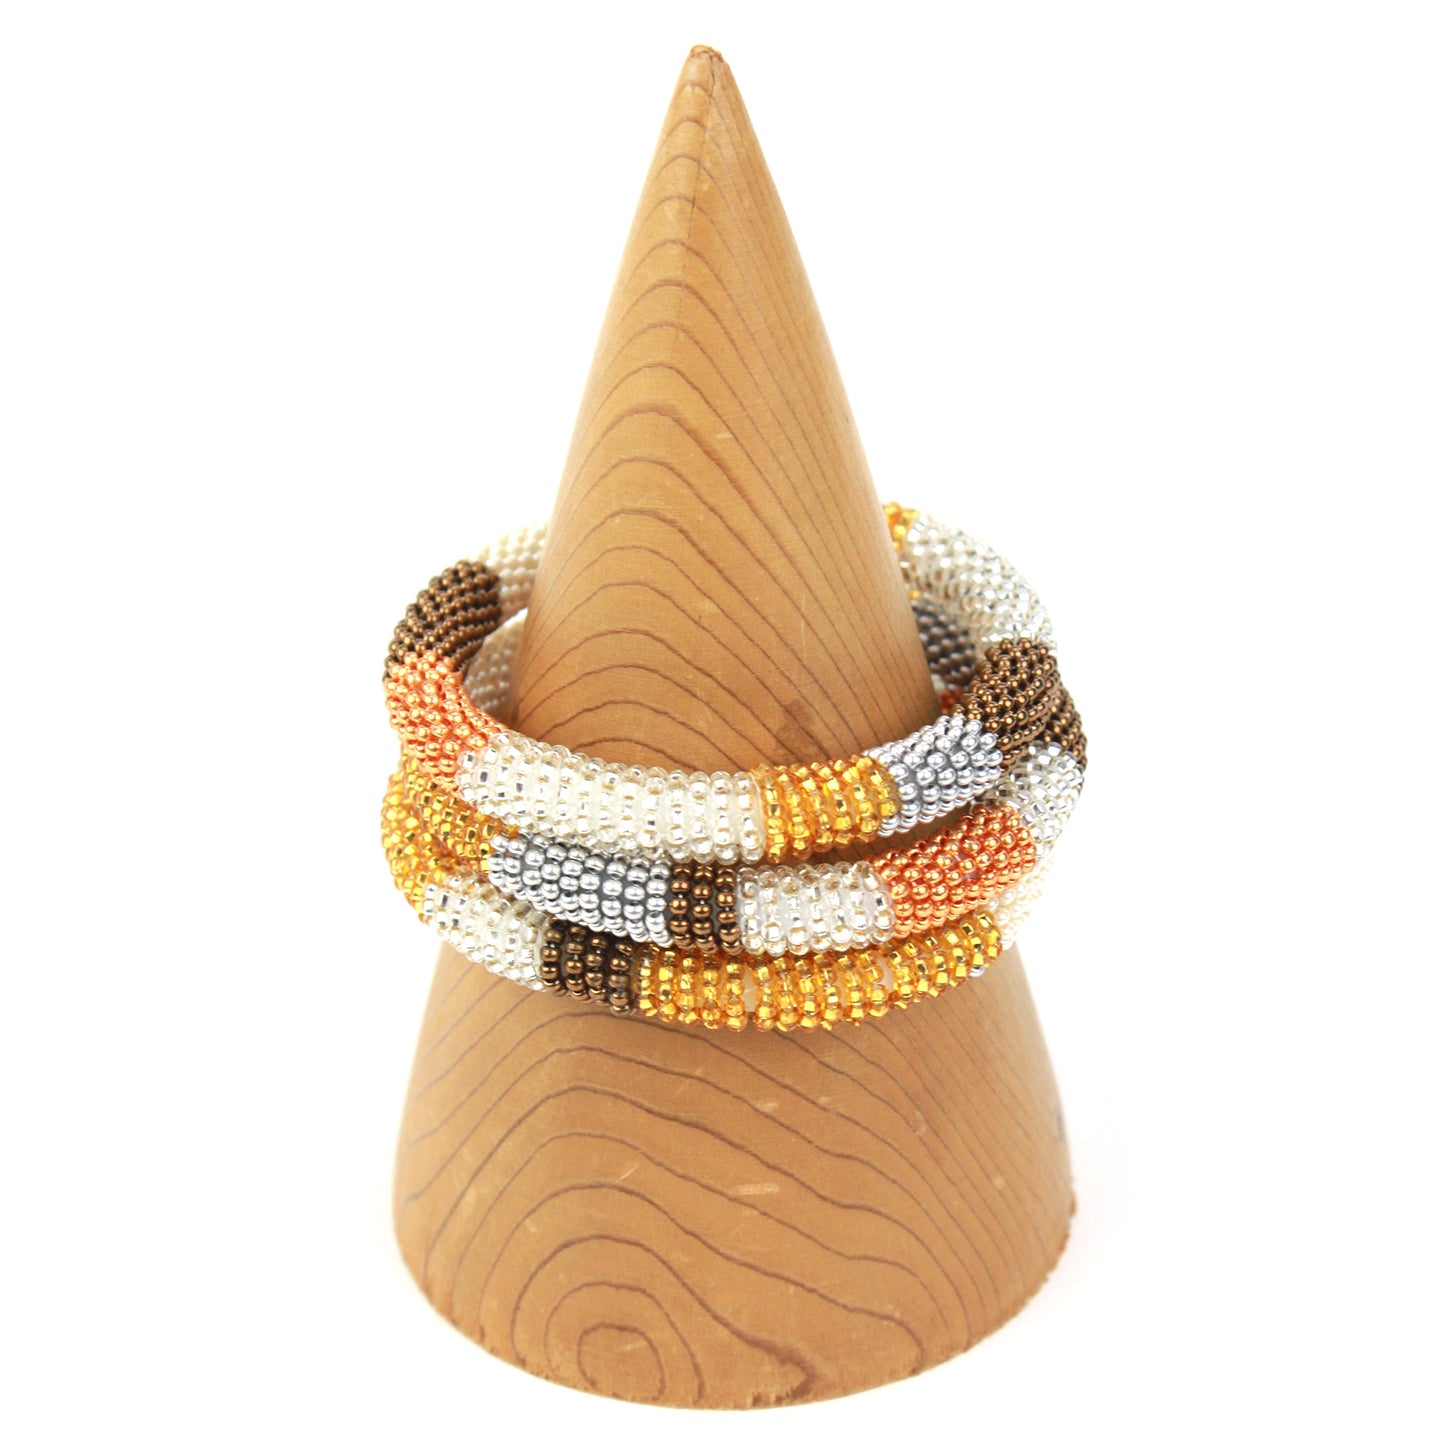 Beaded bracelet - Amber, ivory and gold